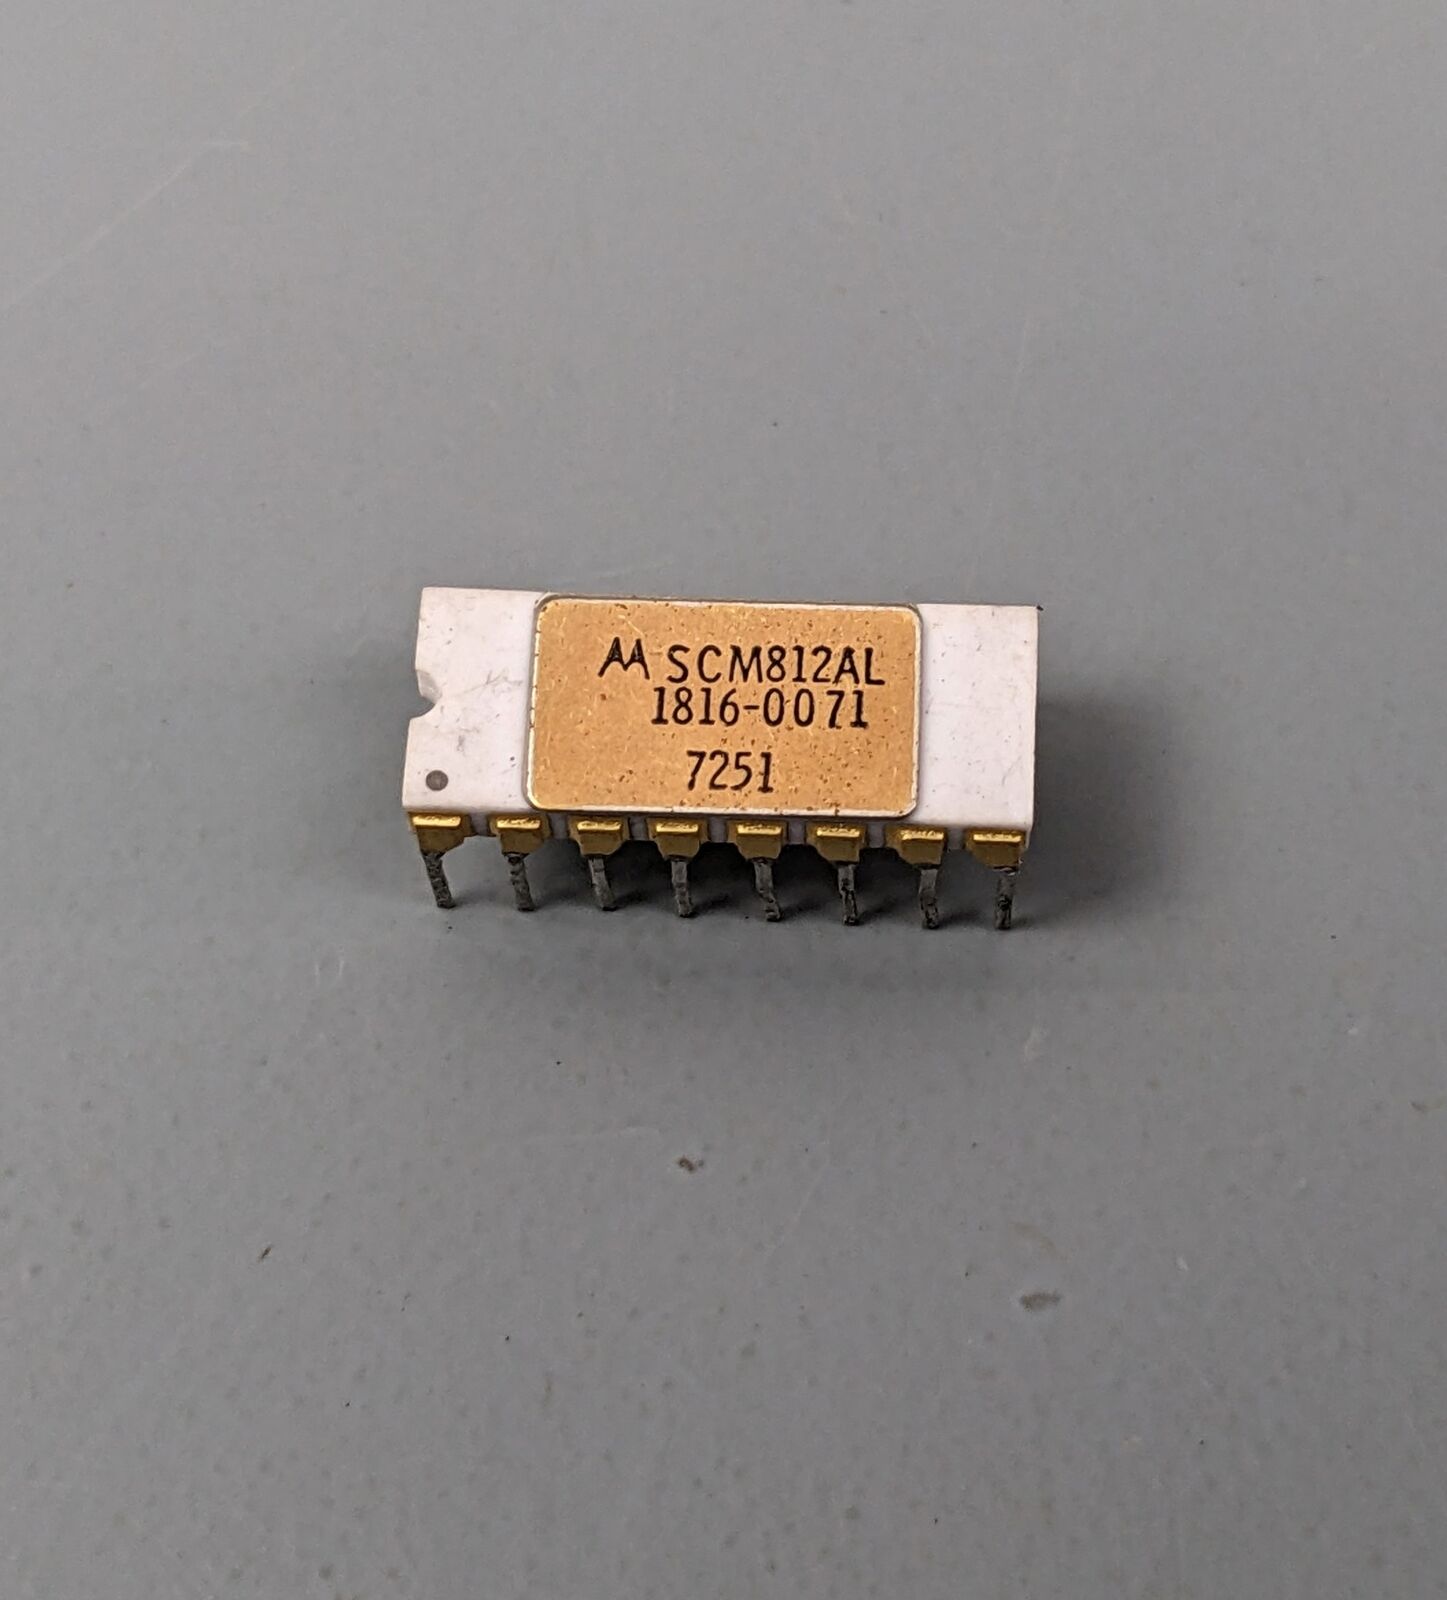 Vintage 256 x 4 ROM Chip for HP 3000 Minicomputer 1816-0071 (Motorola SCM812AL)